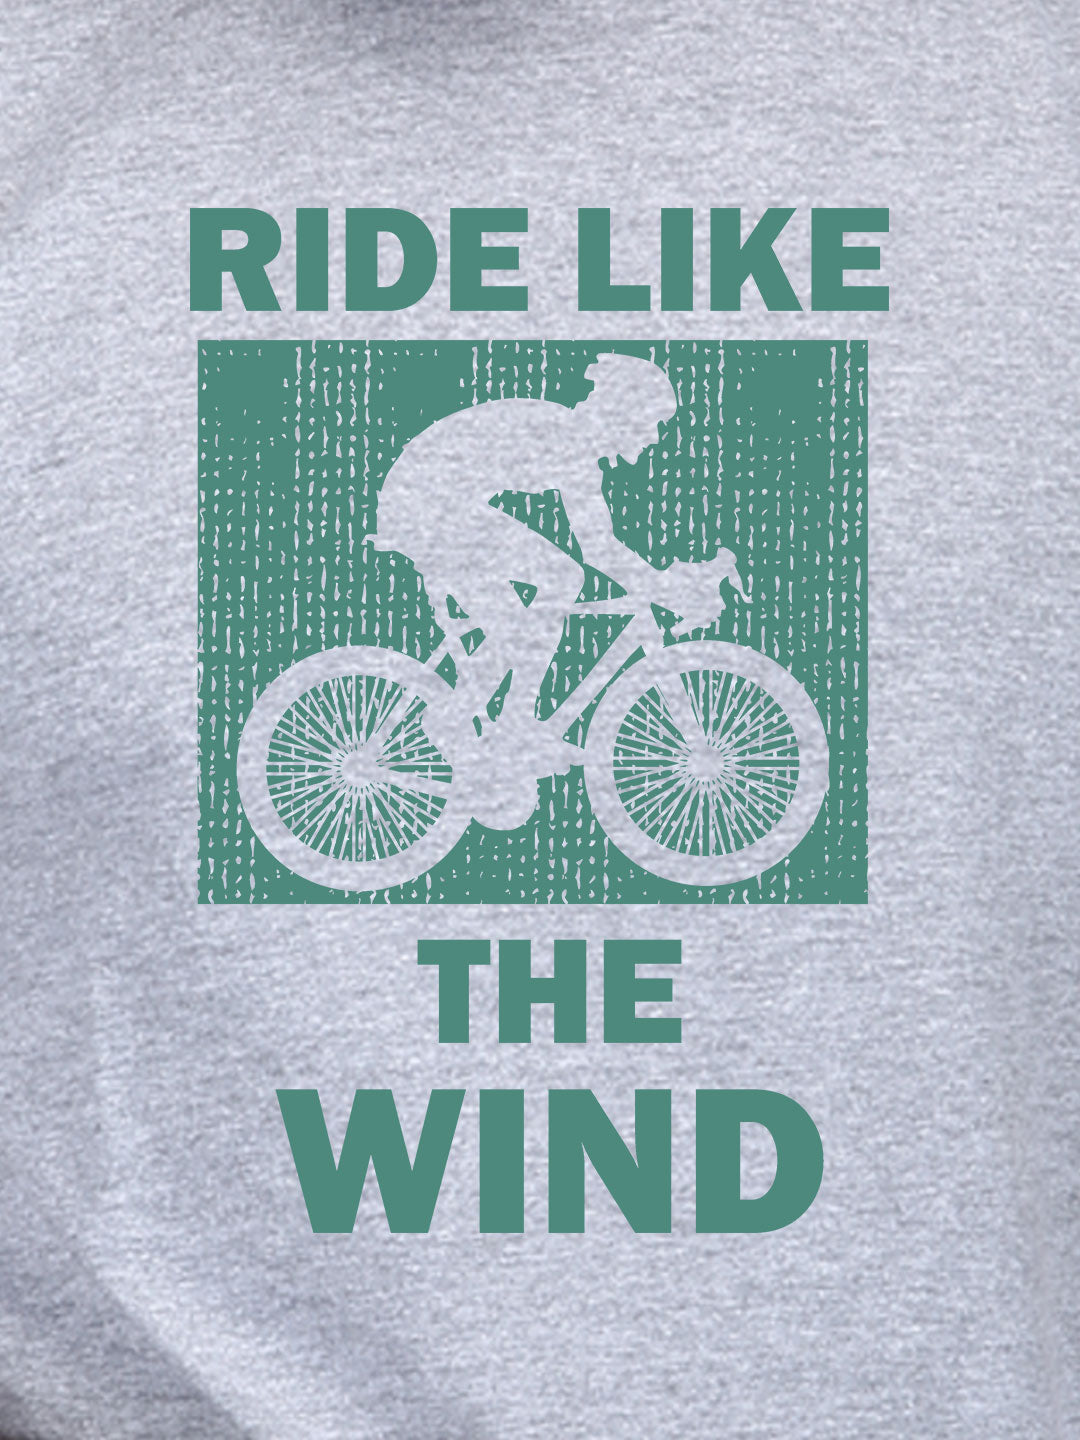 Ride Like The Wind - Premium Round Neck Cotton Tees for Men - Grey Melange